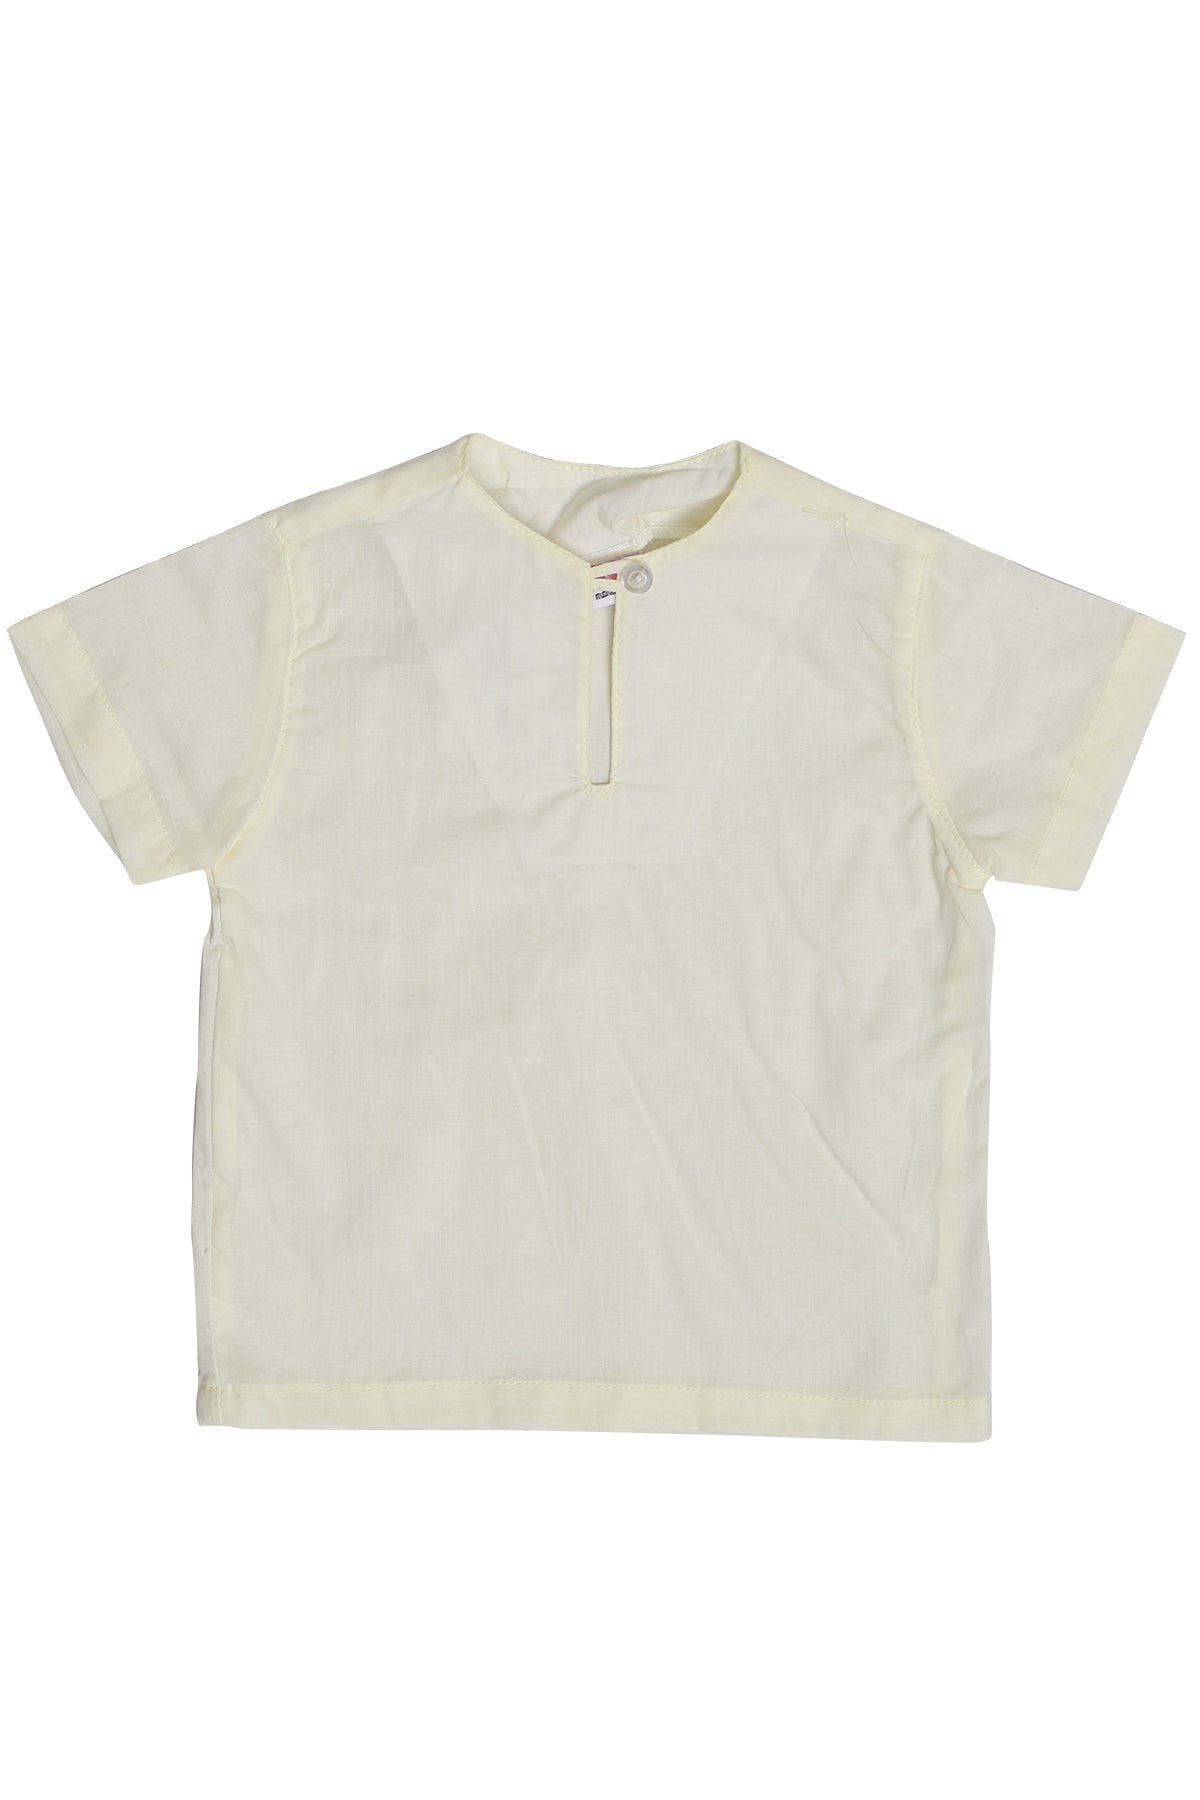 Ozone Baby Boys Short Sleeve Shirt